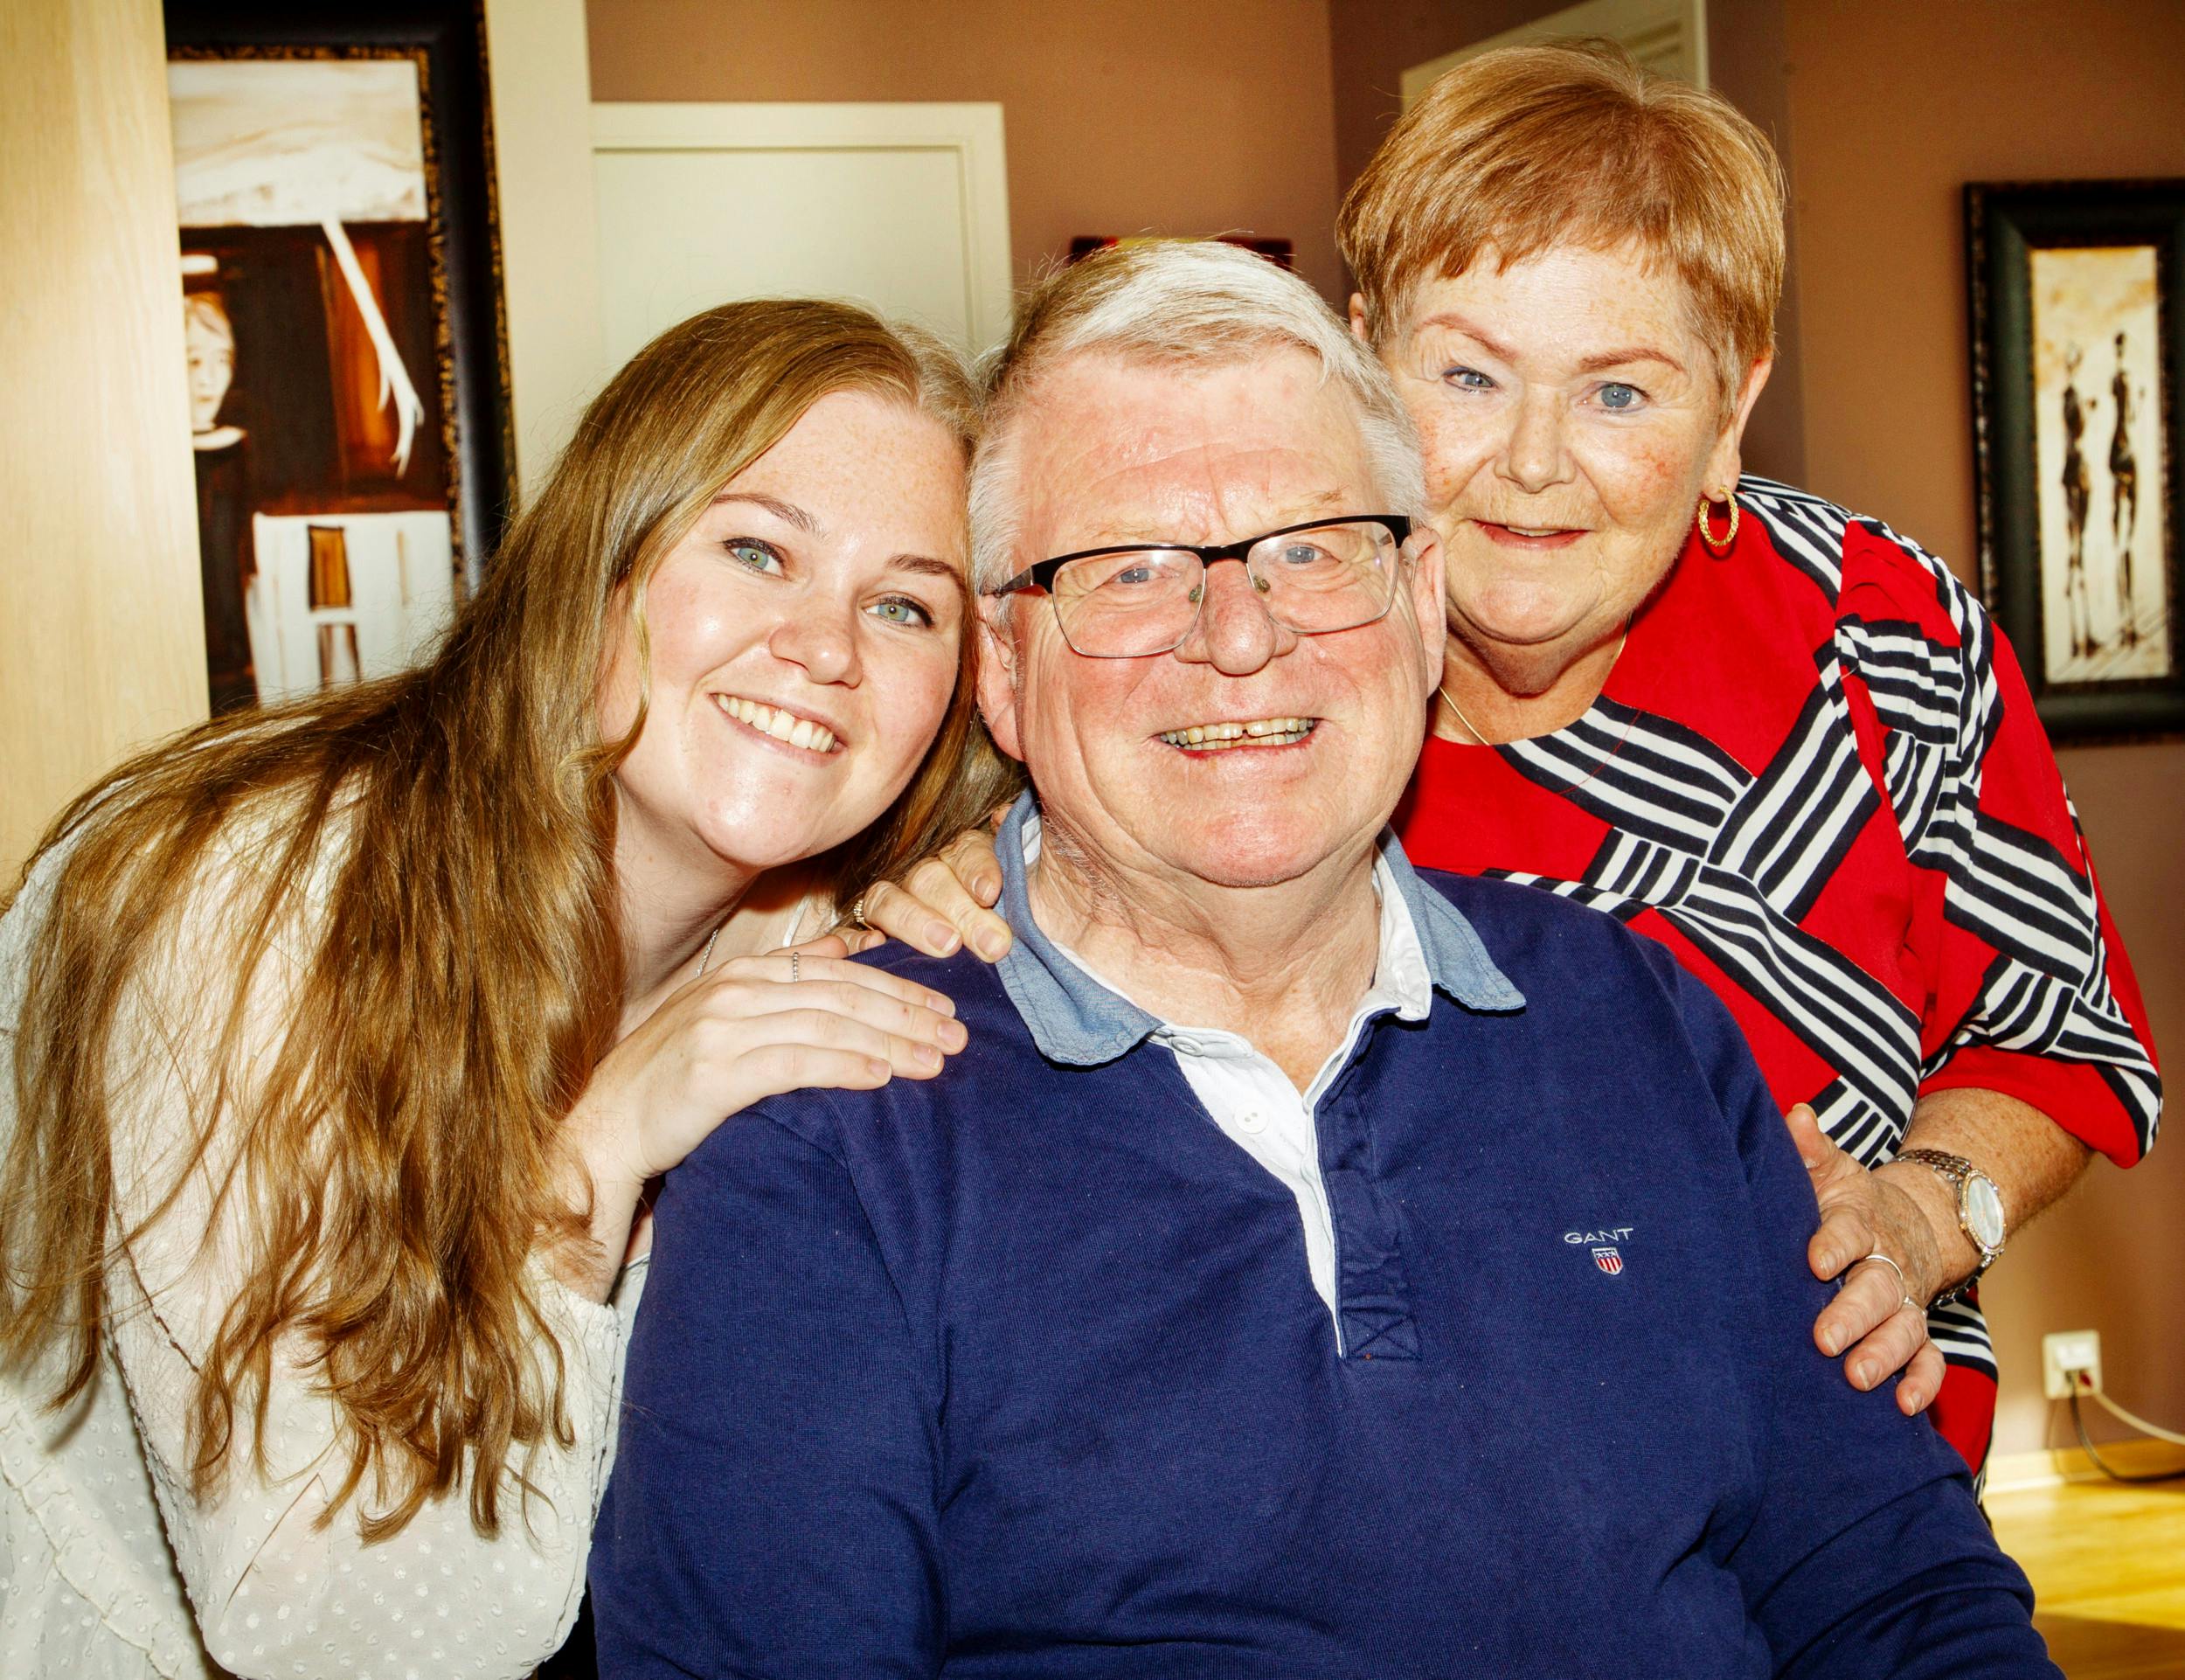 Demensramte Svein Solberg, 73, omgivet af sin datter, Marie Solberg, 25, og sin hustru, Mette Solberg, 58.